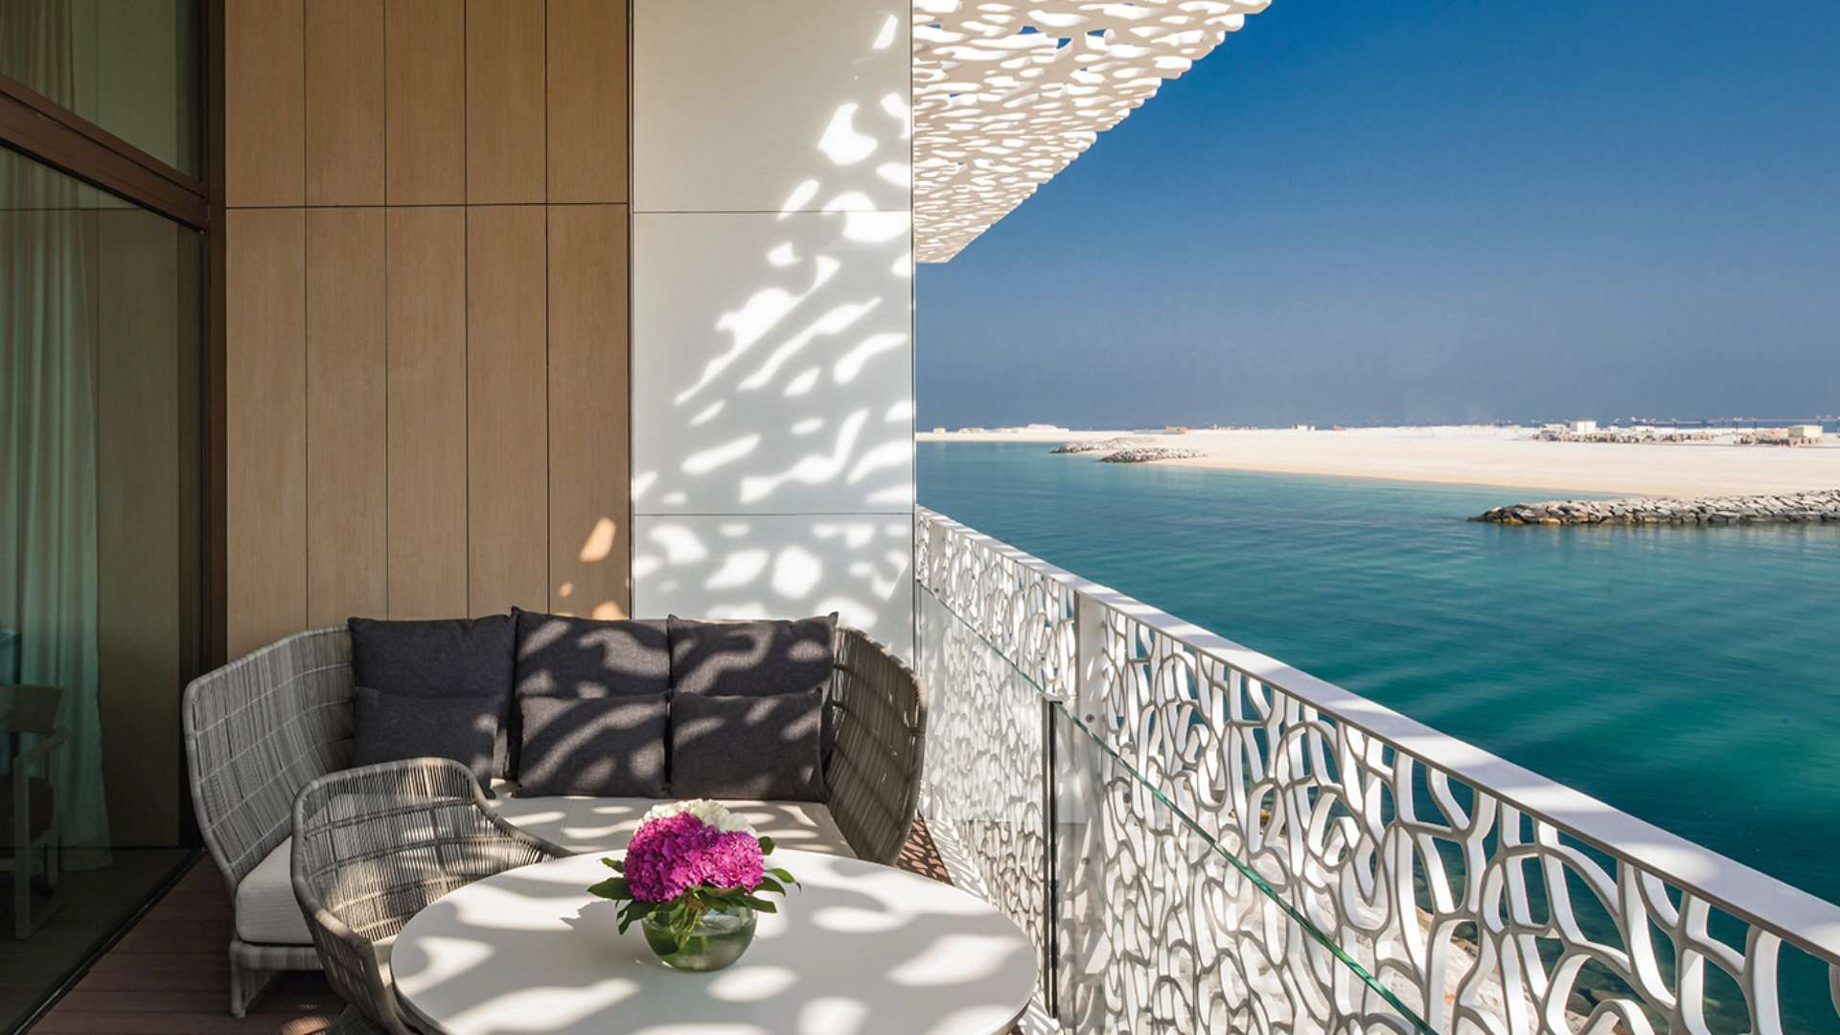 Bvlgari Resort Dubai – Jumeira Bay Island, Dubai, UAE – Guest Suite Private Deck